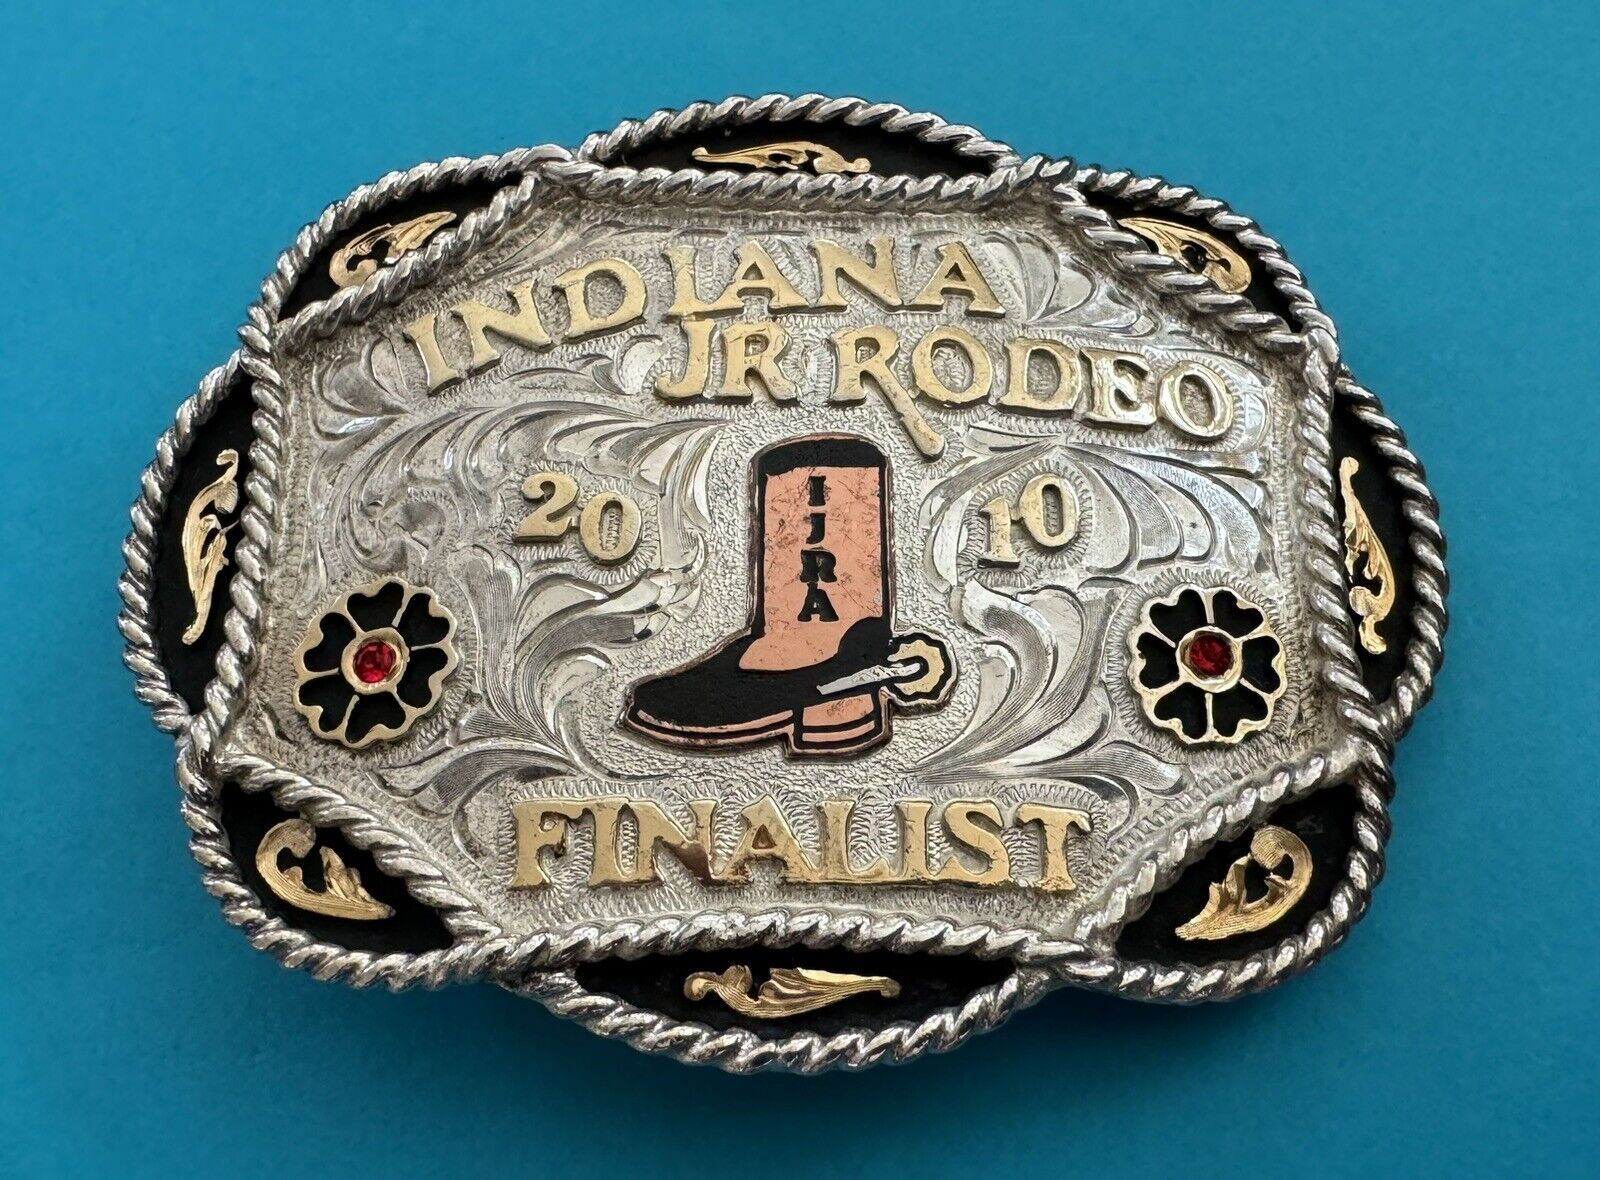 True Vintage 2010 Indiana Jr Rodeo Finalist Tres Rios Silver Trophy Belt Buckle